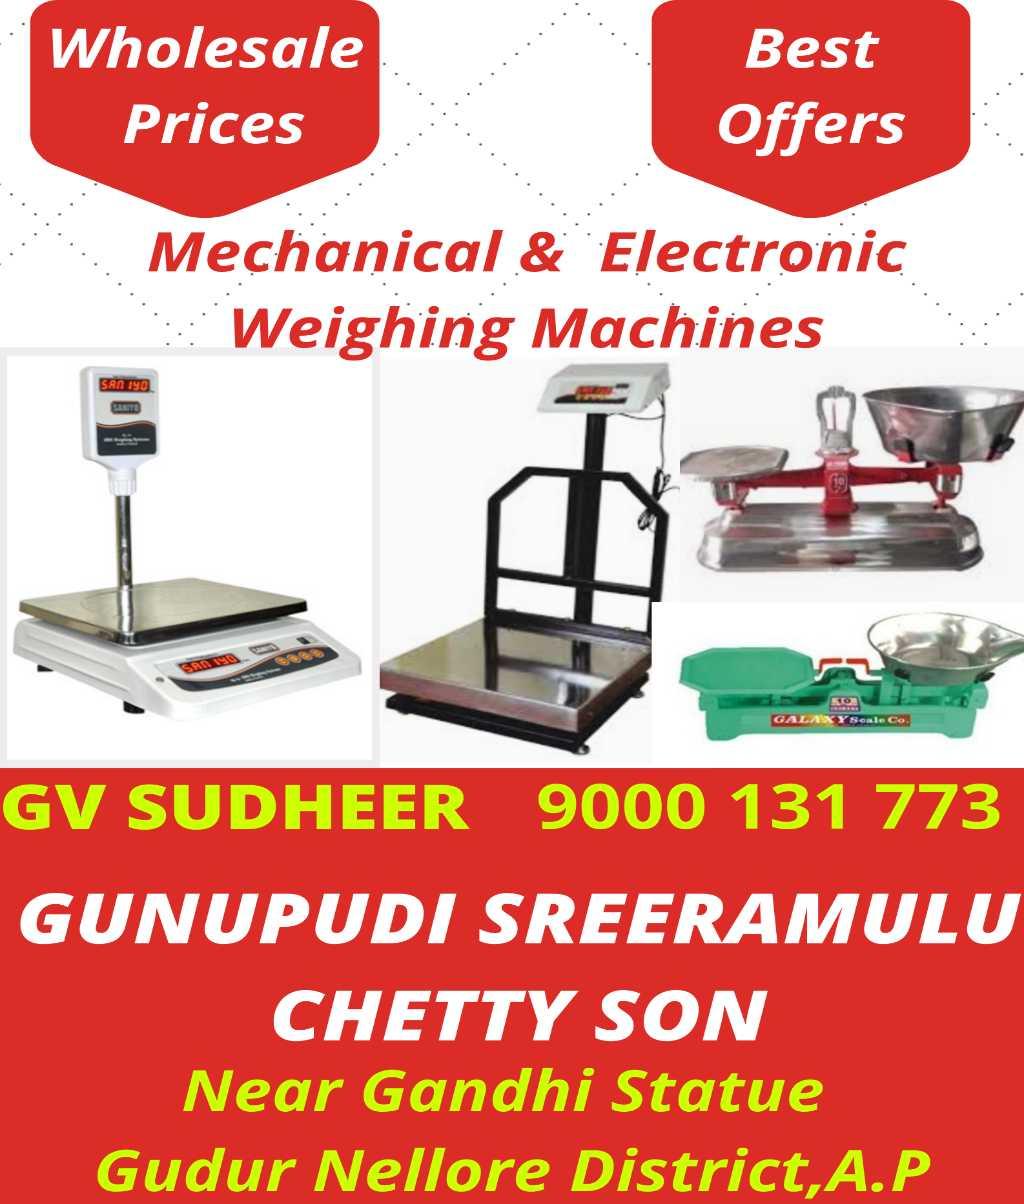 Gunupudi Sreeramulu Chetty Son